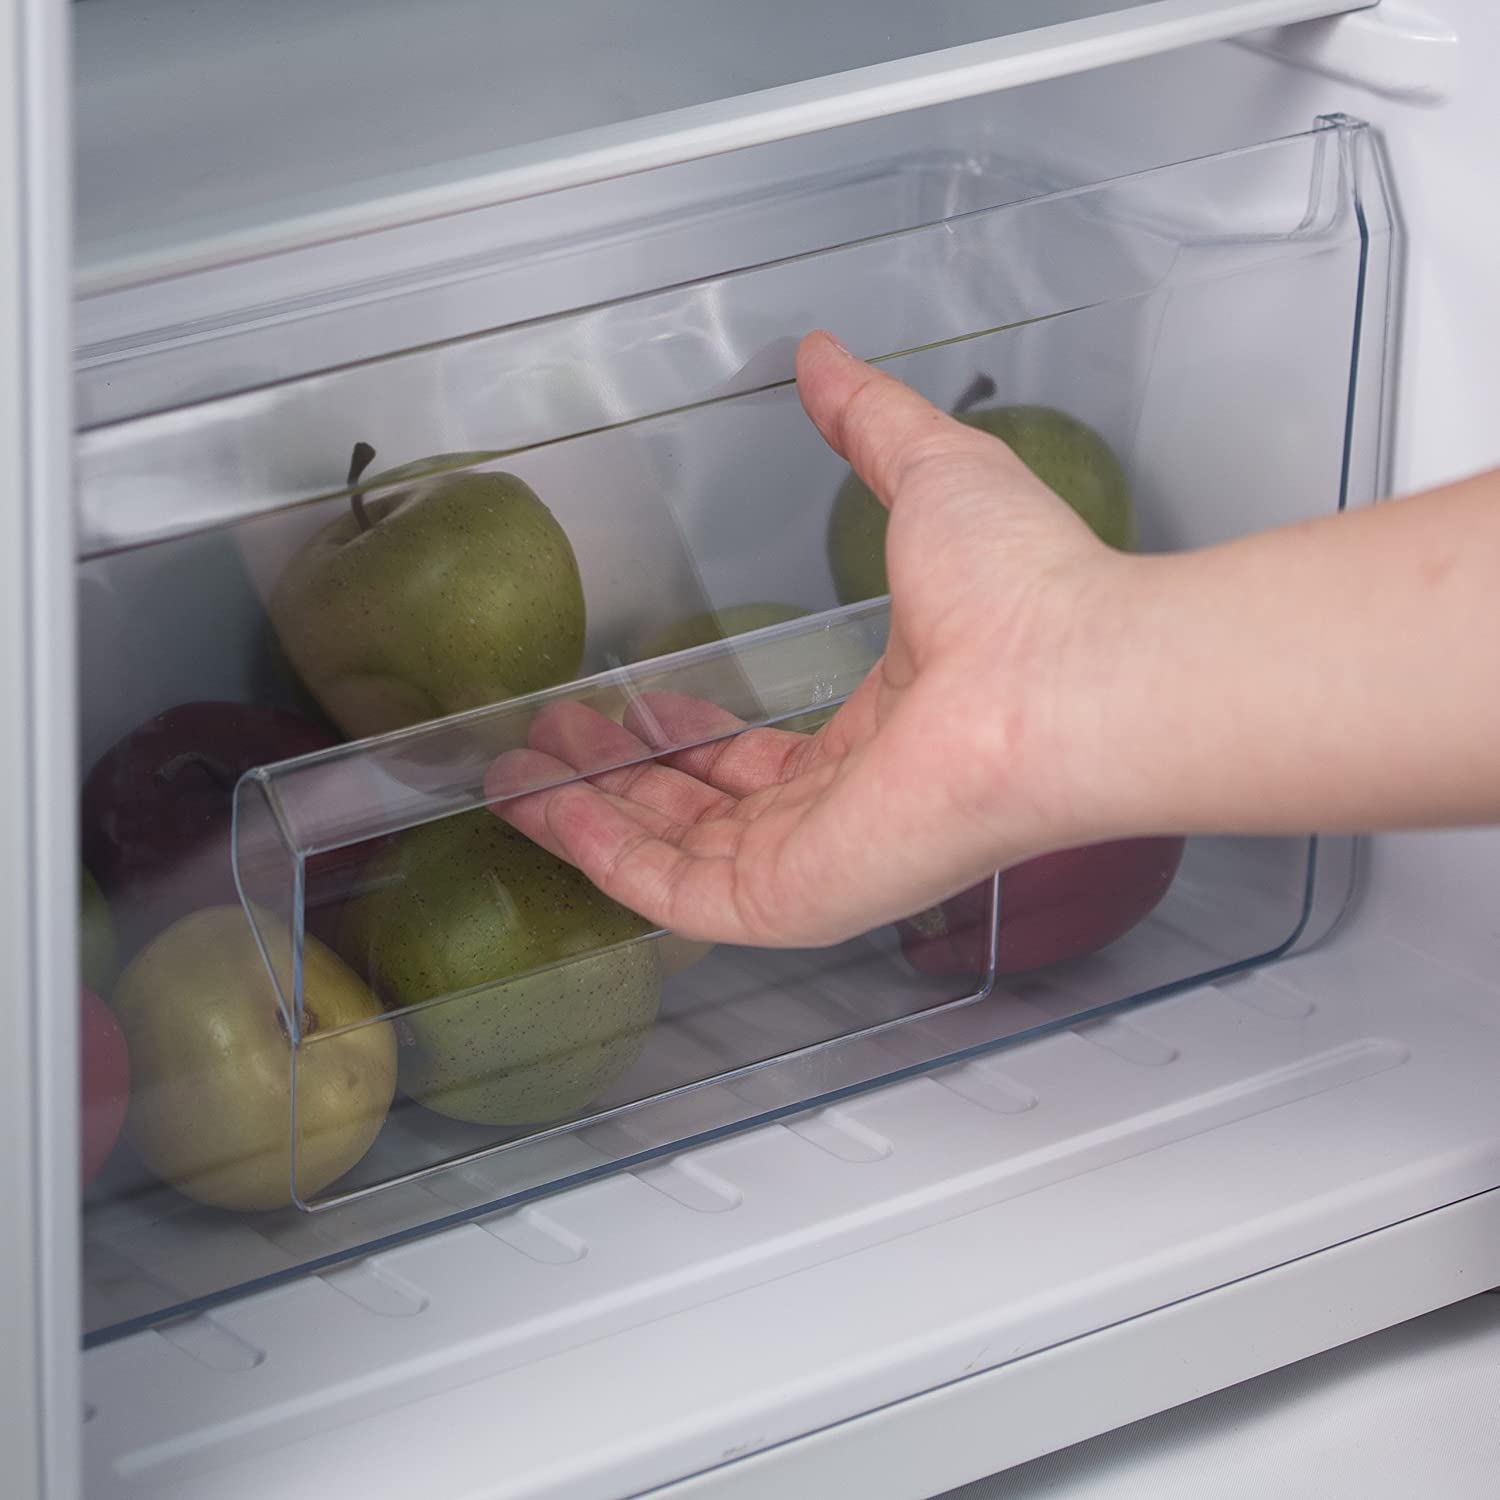 Haier 3.2-cu ft Mini Fridge Freezer Compartment (White) at